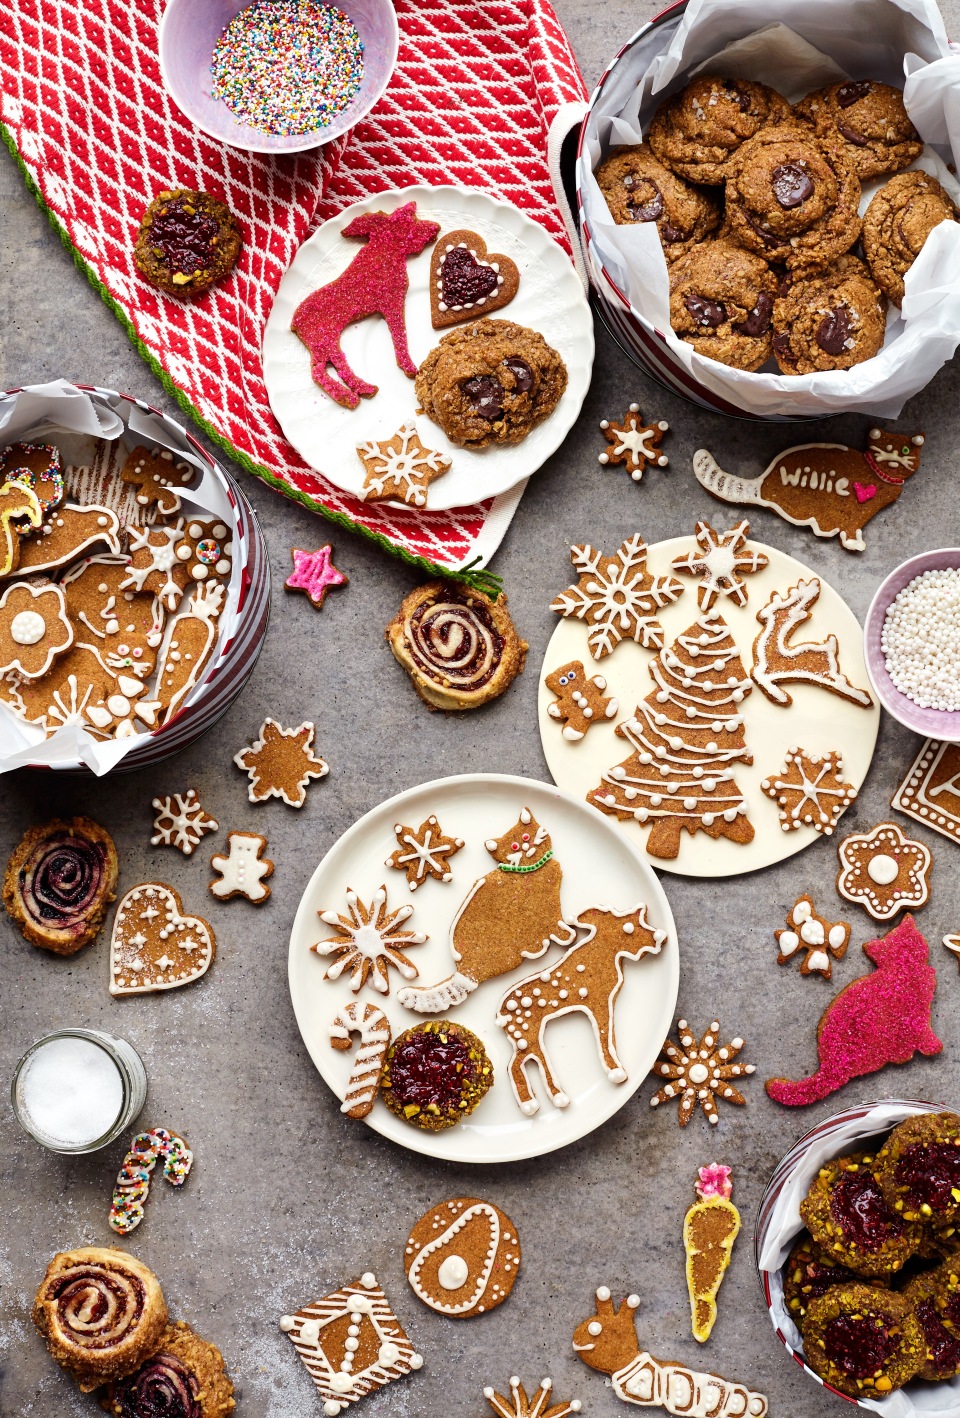 Chosen Foods Gluten-Free Holiday Cookies | Honey-Nut Sugar Cookies, Pistachio Chia Jam Wreaths, Oatmeal Chocolate Chips | Lemon Fire Brigade